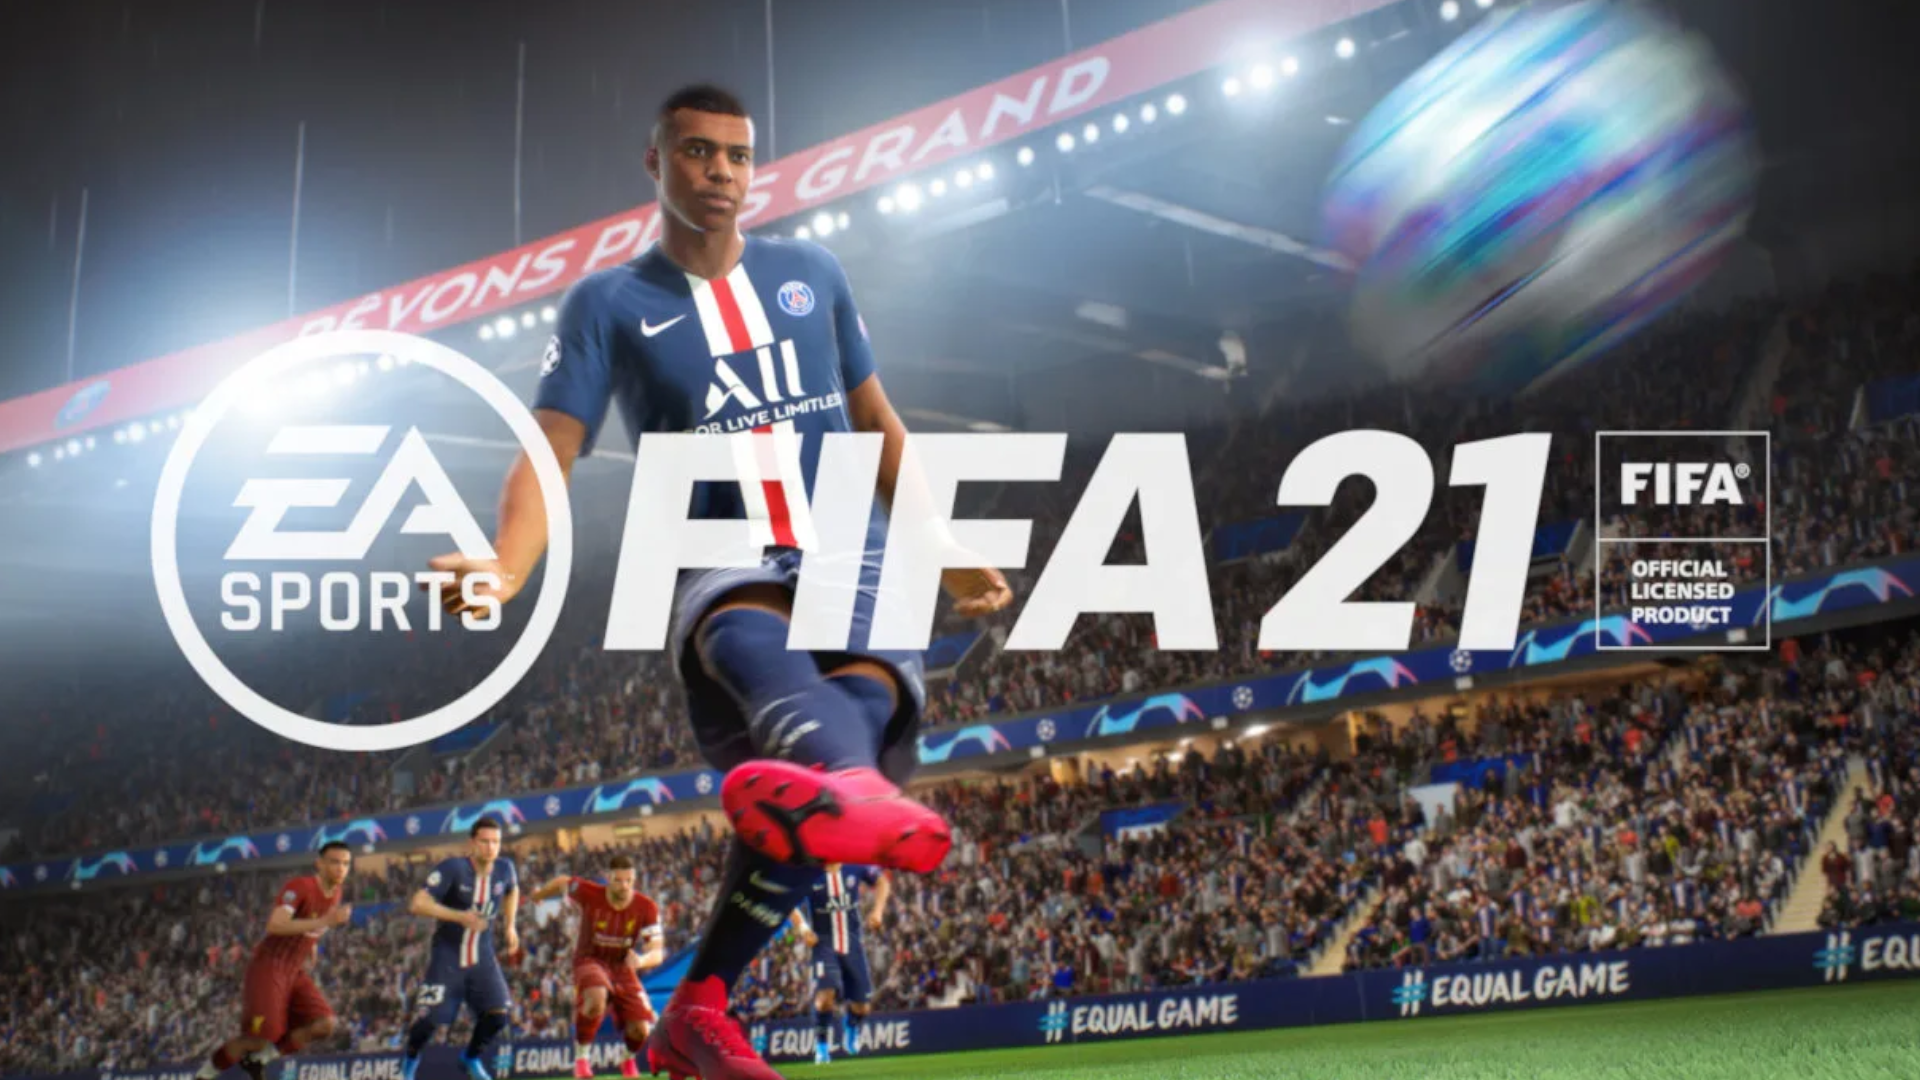 Download Hany Mukhtar FIFA 21 Mobile Game Banner Wallpaper